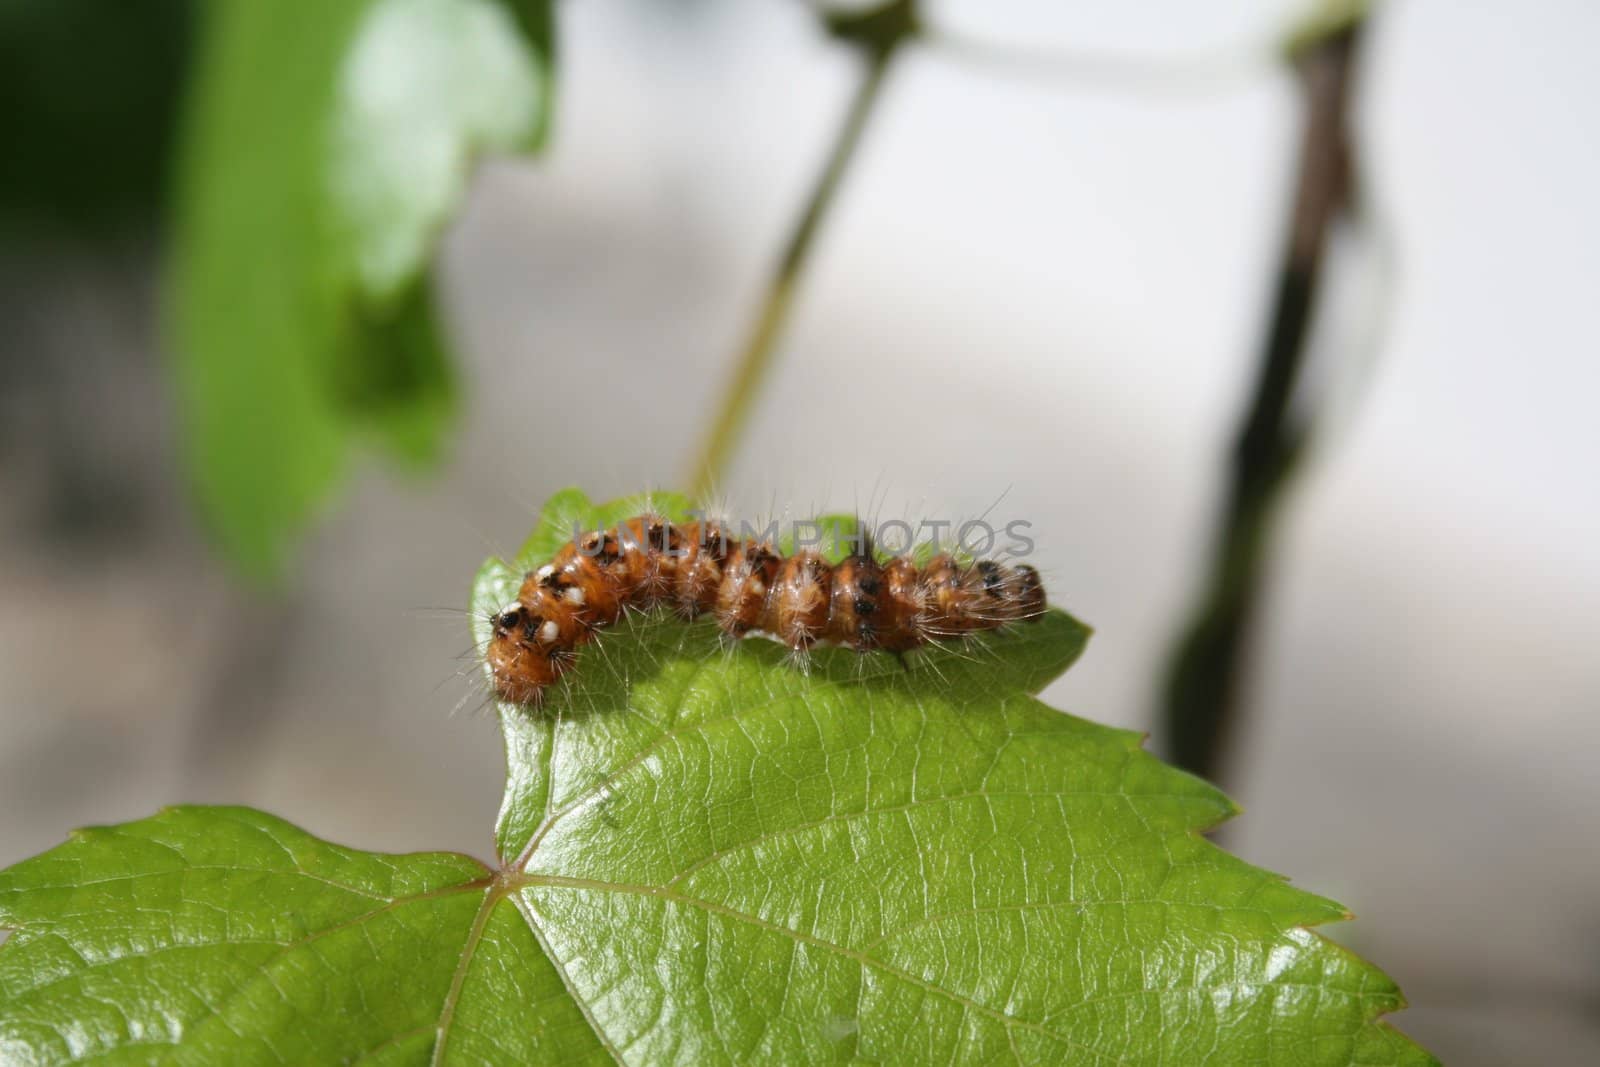 Little orange and black caterpillar on bright green grapevine leaf